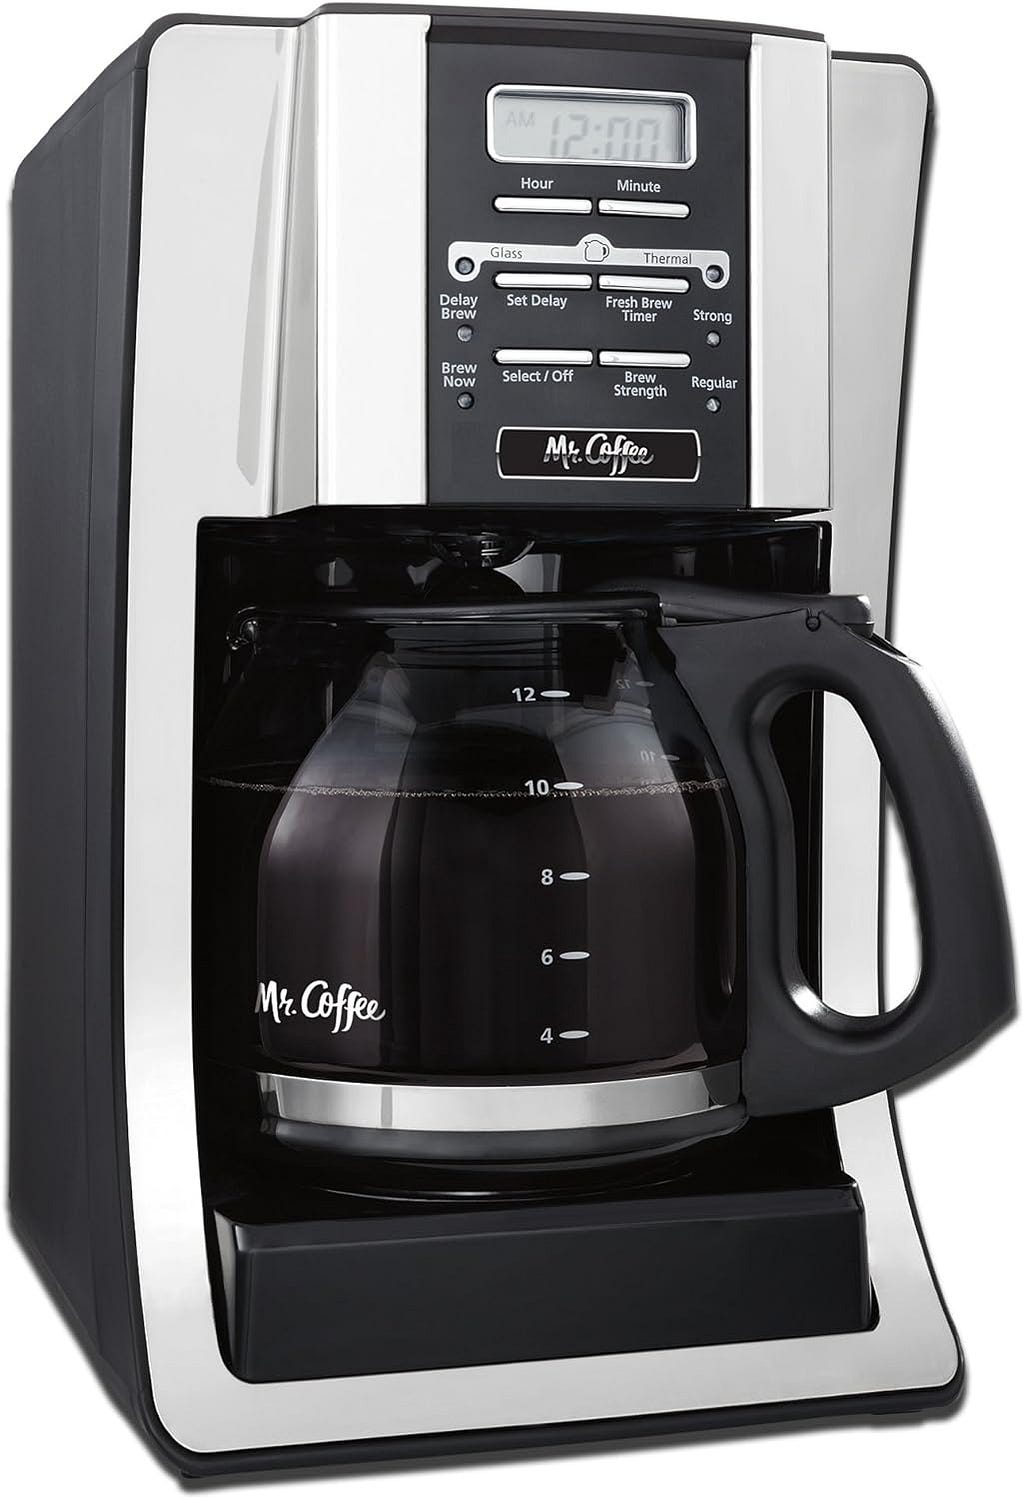 Mr. Coffee 12 Cup